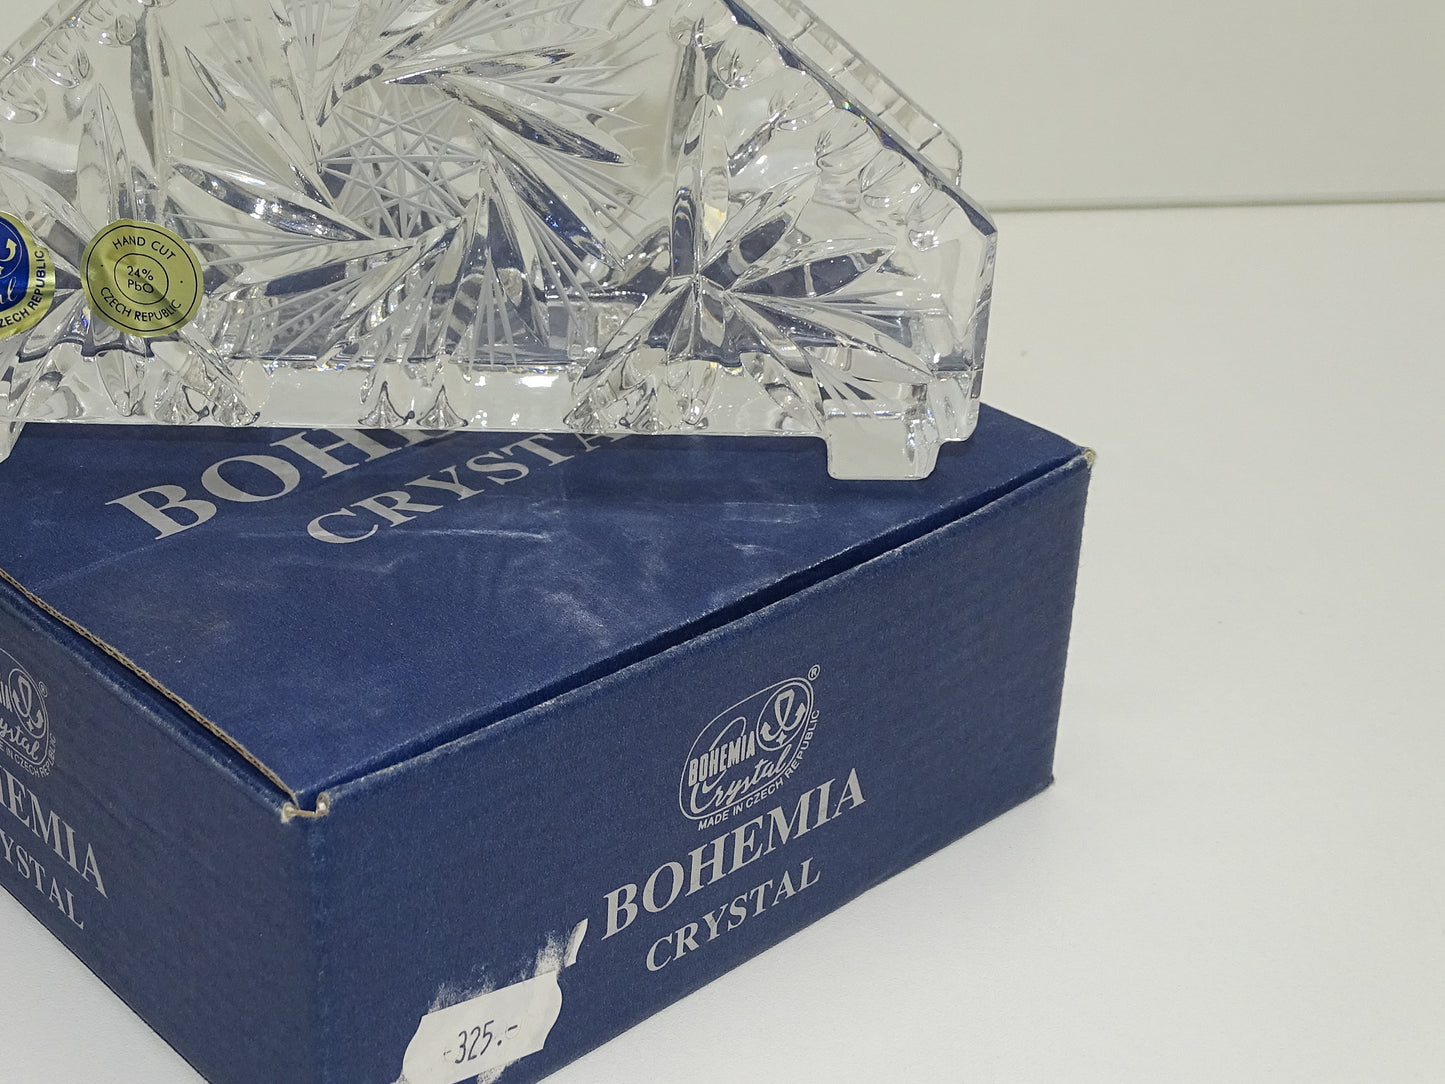 Kristallen Servethouder: Bohemia Crystal, Czech Republic